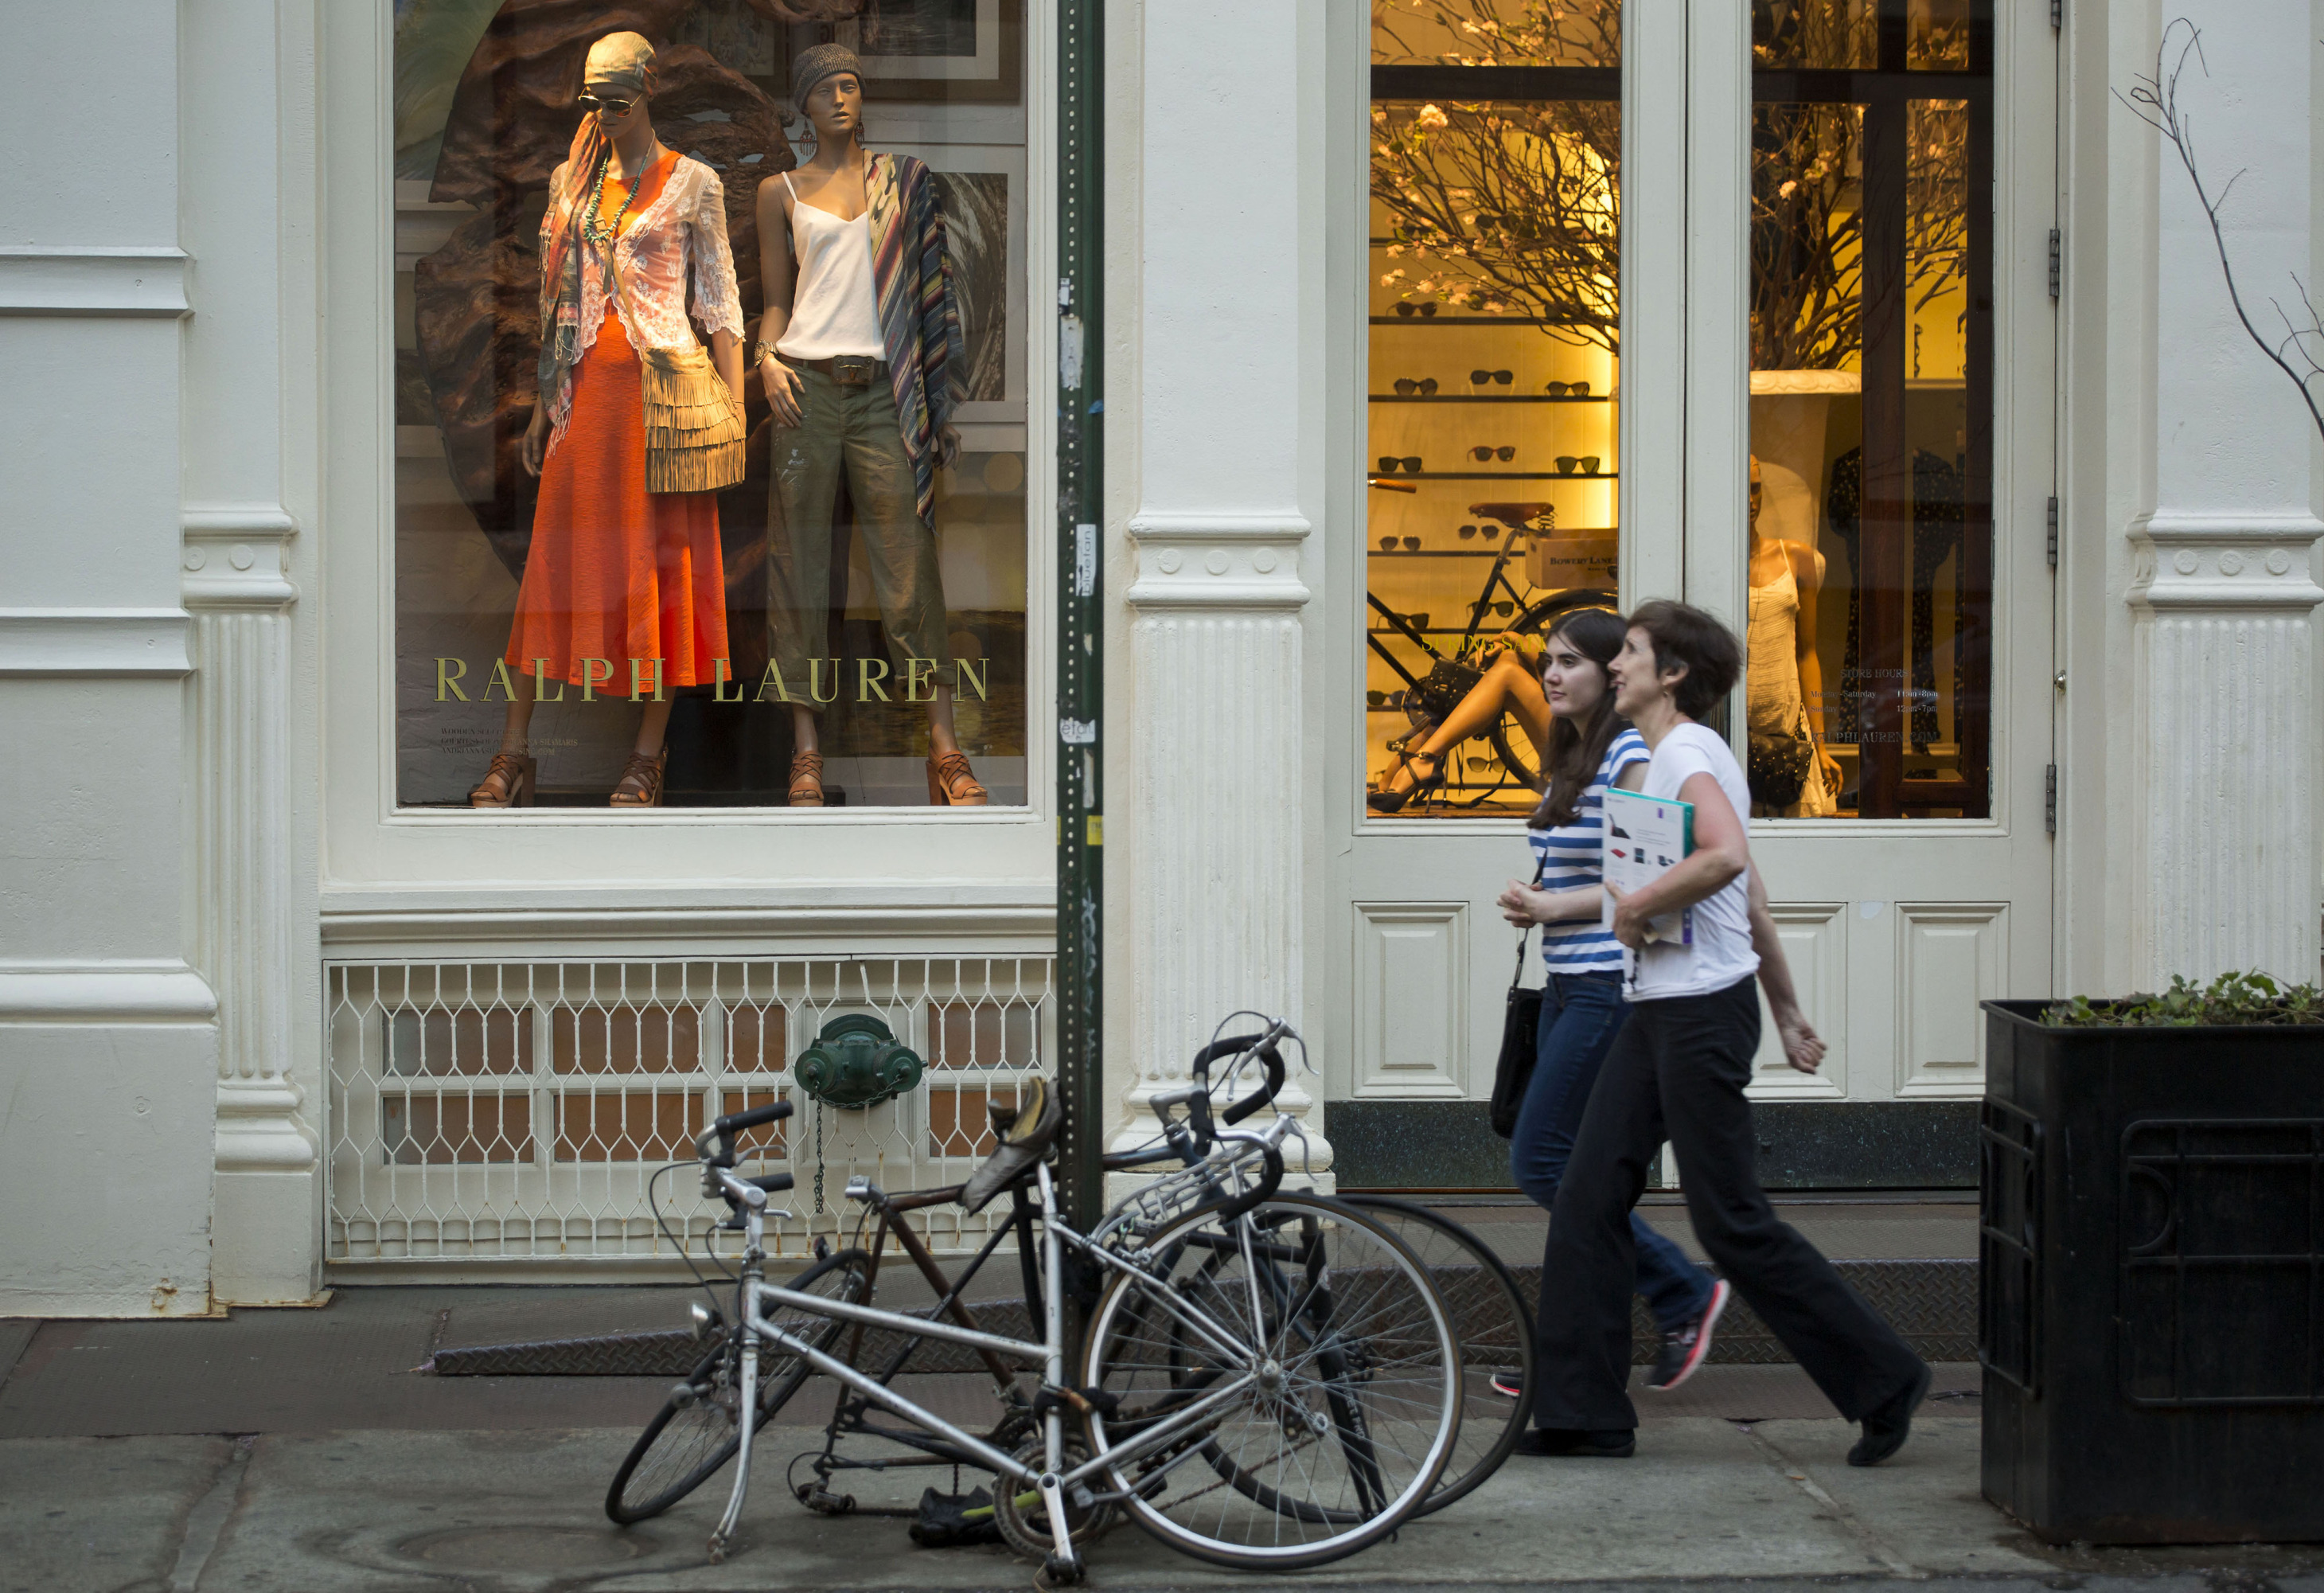 Ralph Lauren to cut jobs, close flagship Fifth Avenue Polo store